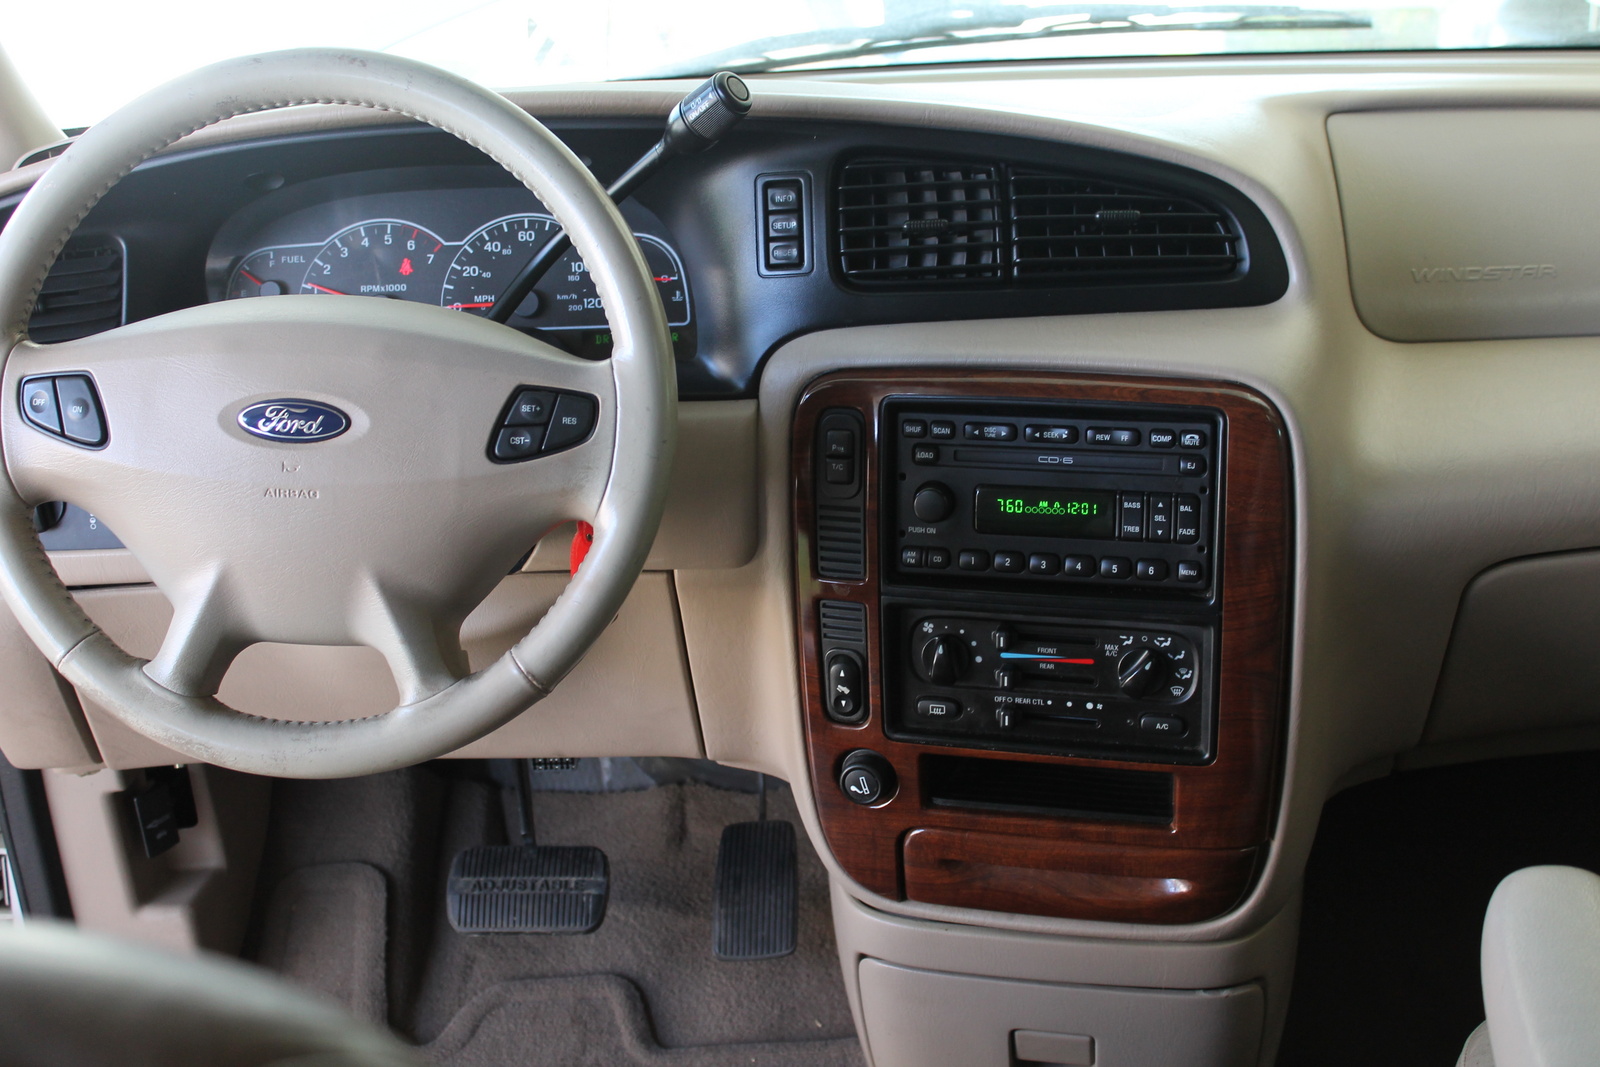 2002 Ford windstar interior dimensions #2